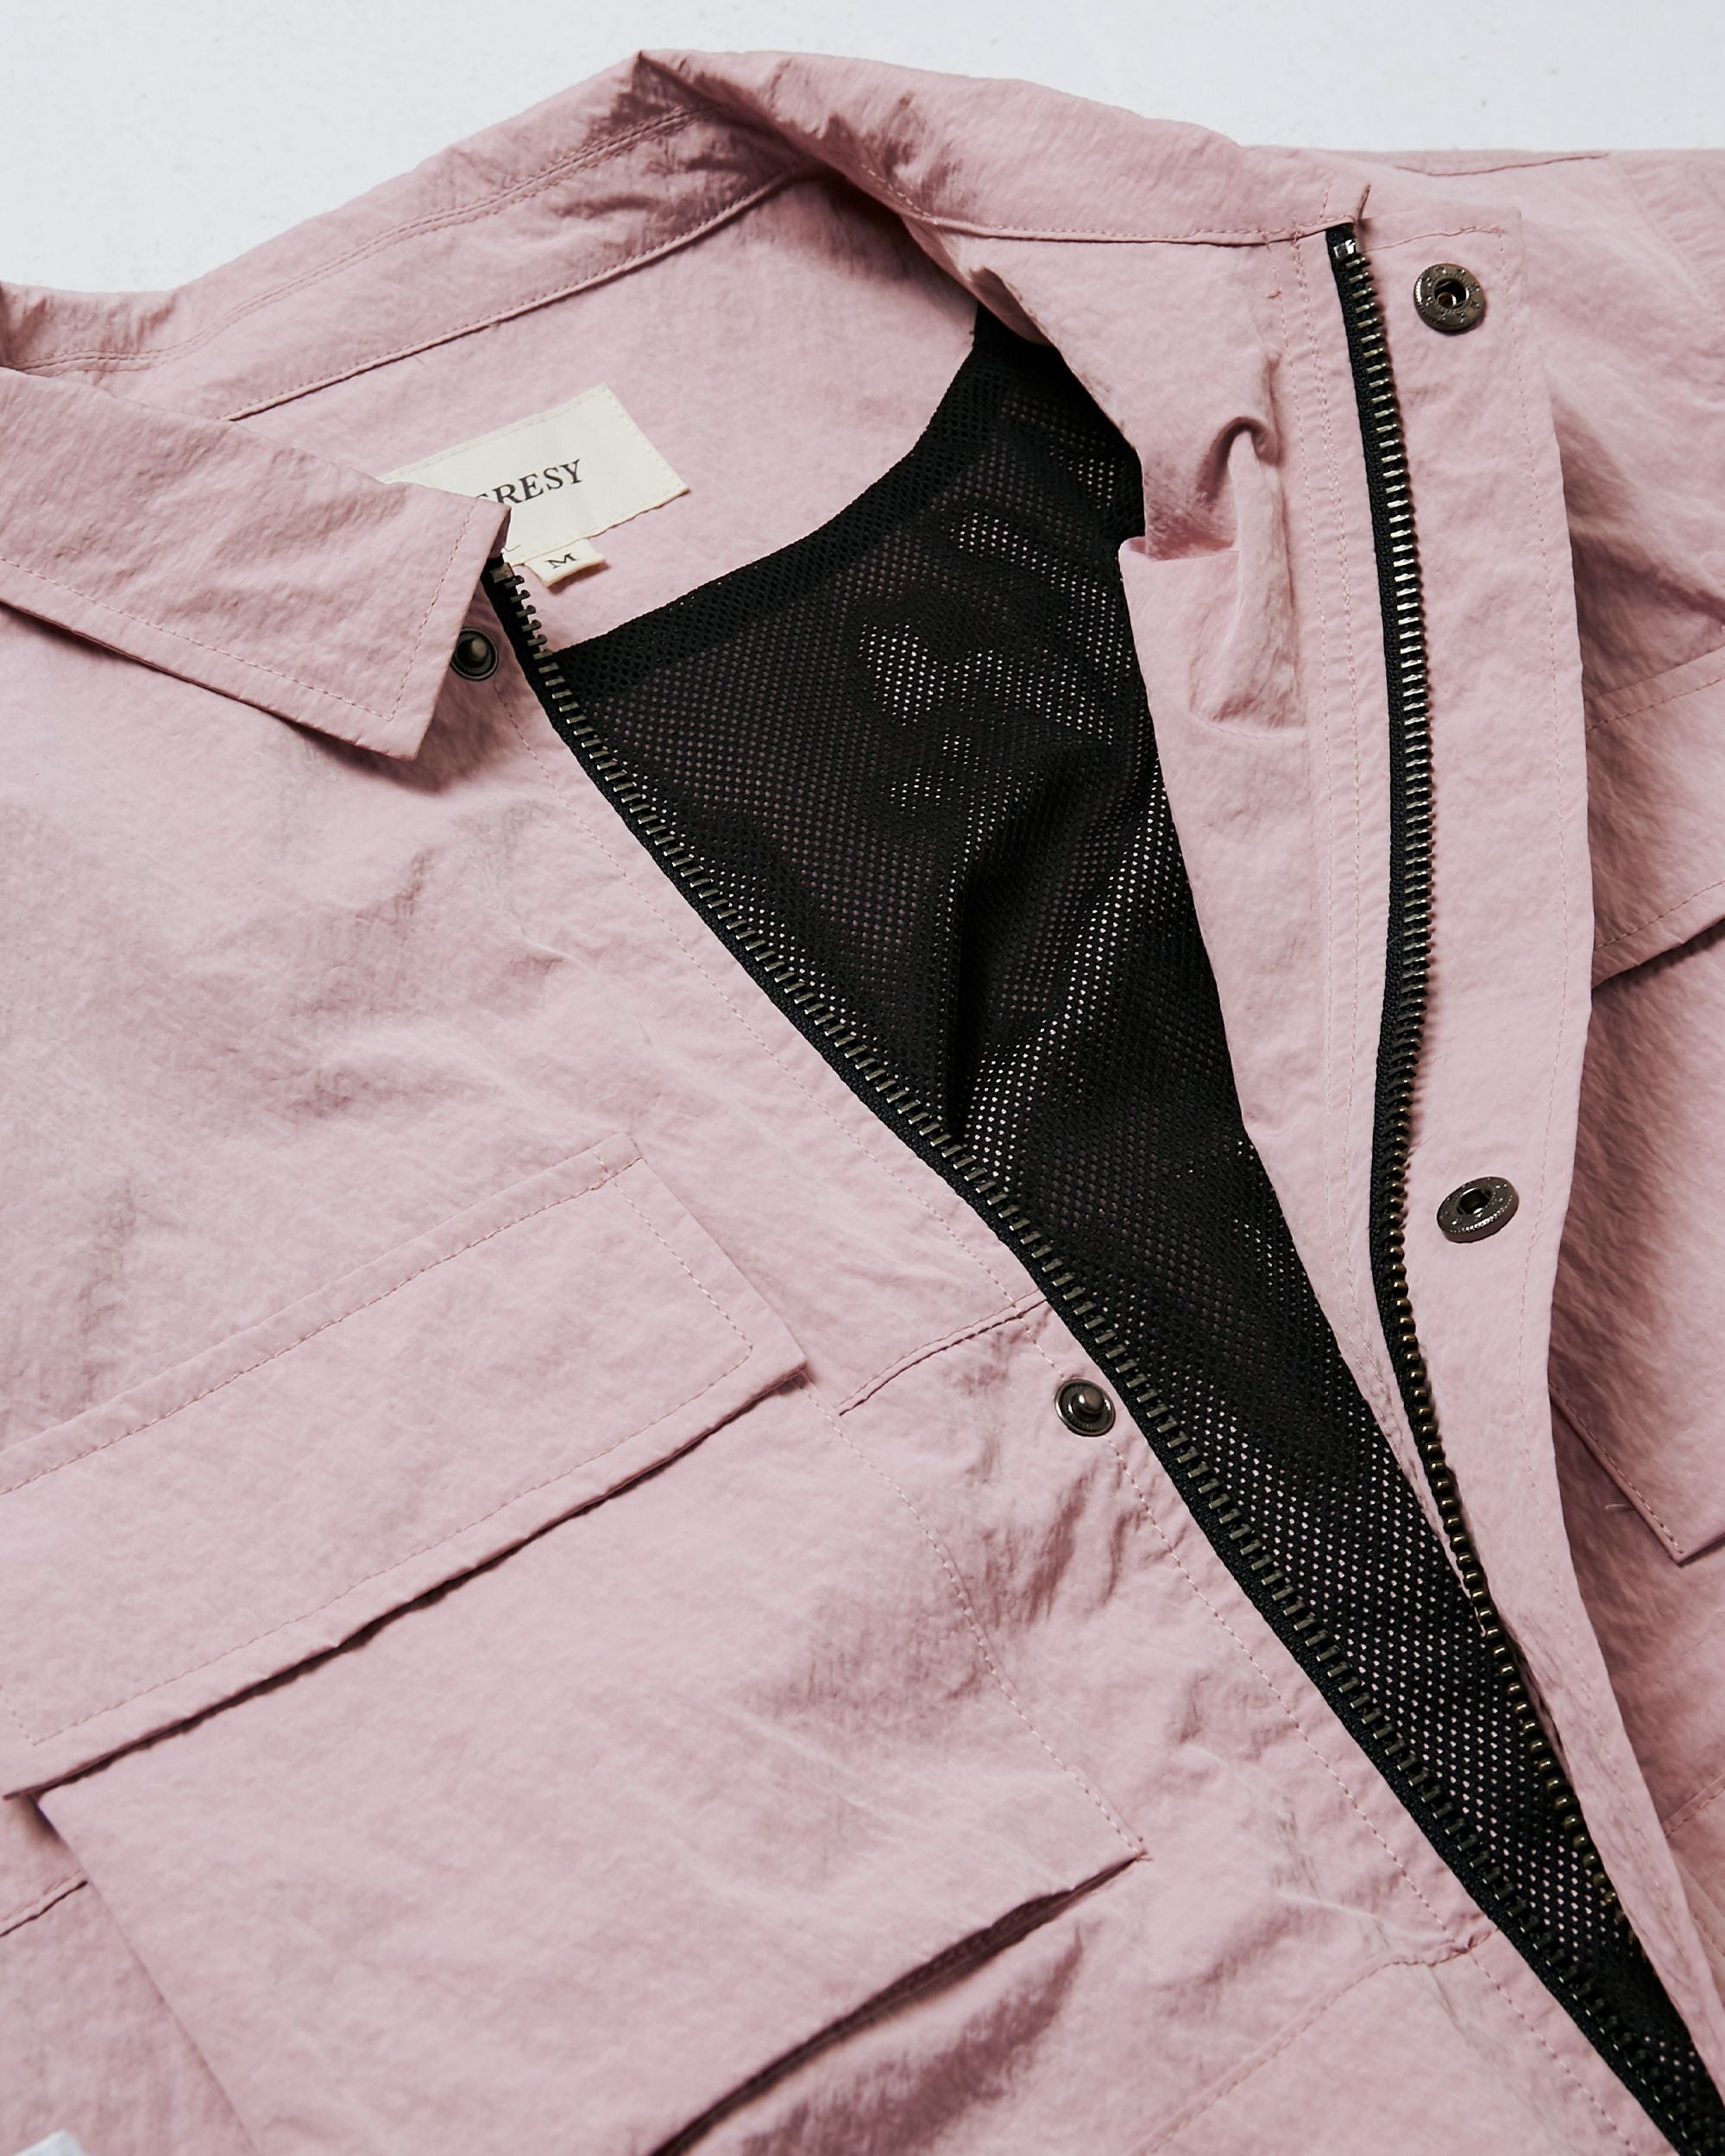 Blithe Jacket - Pink